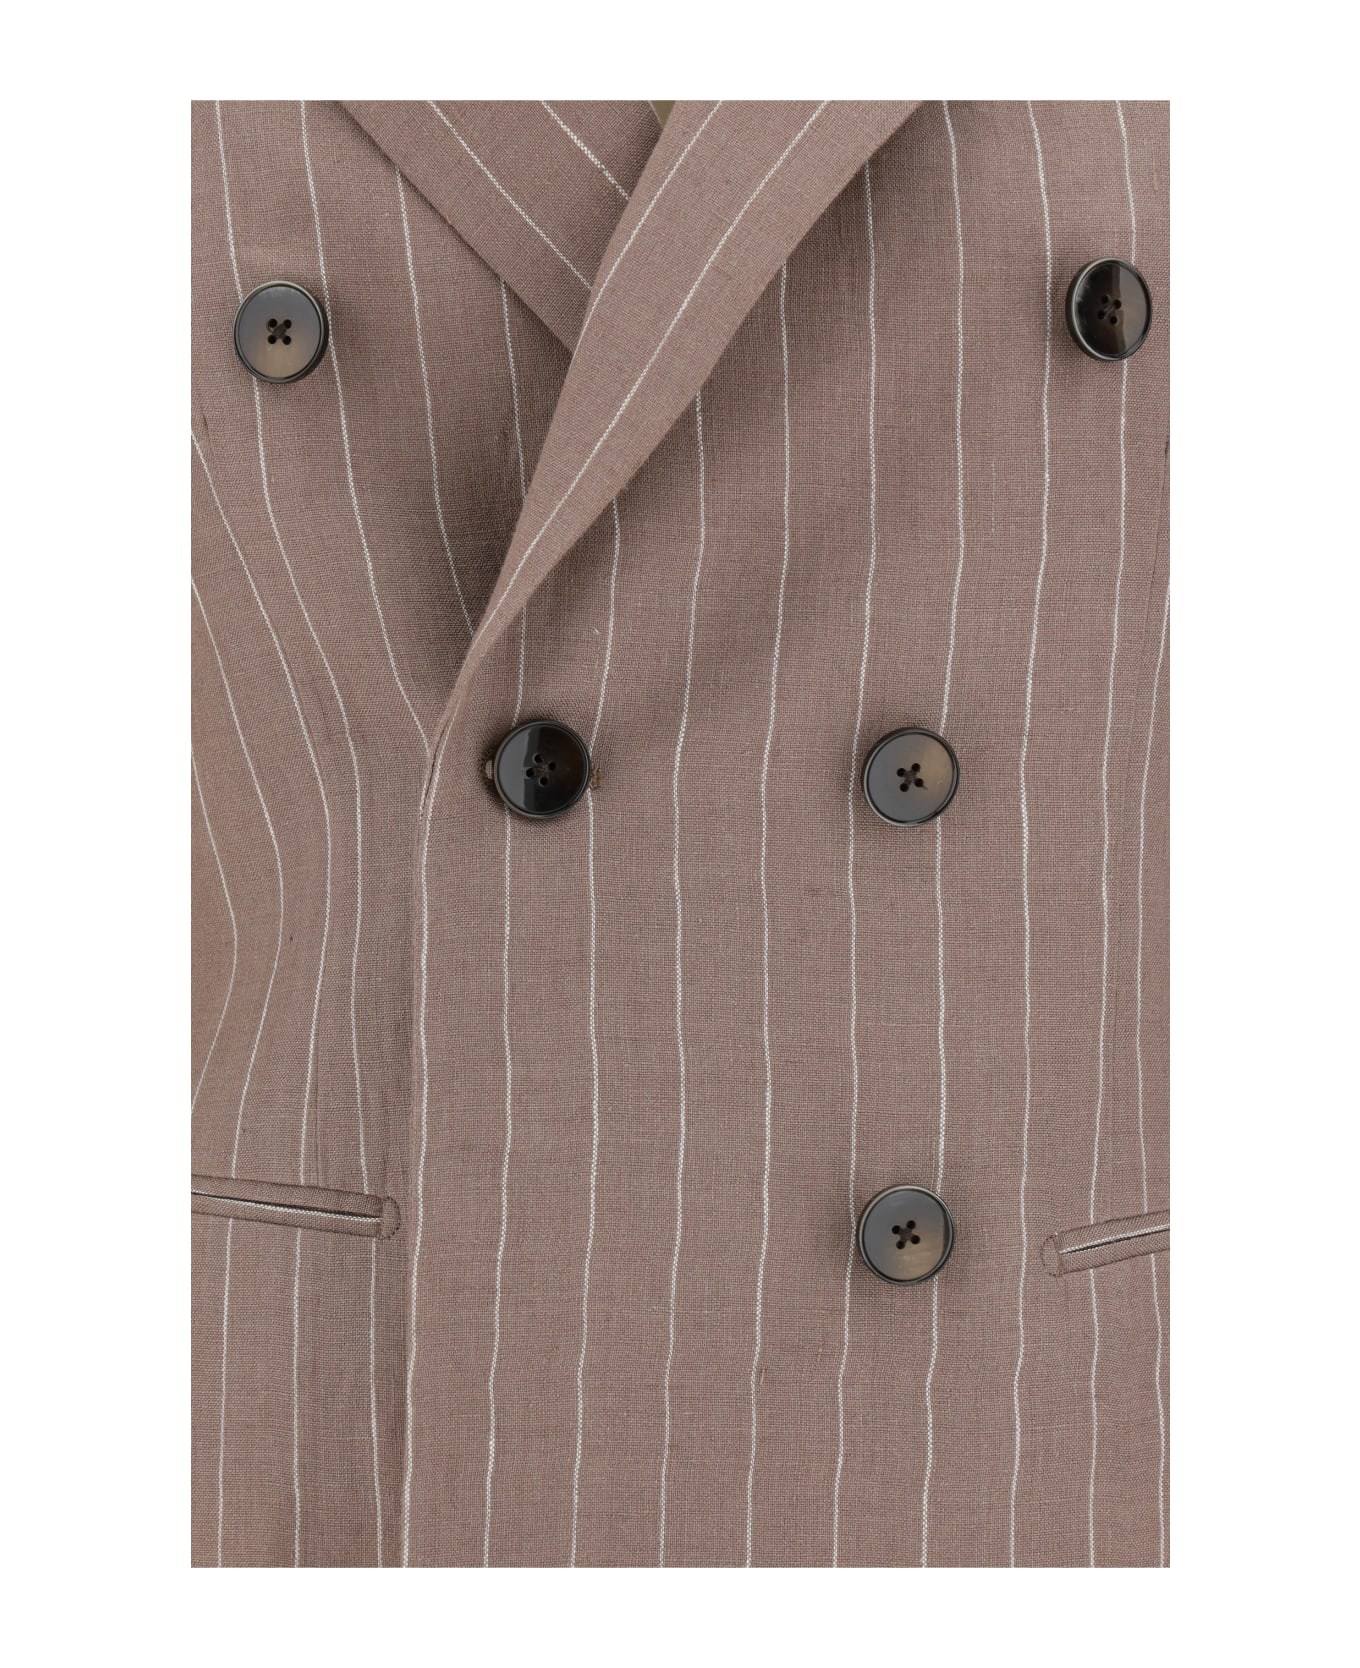 Lardini Blazer Jacket - Ner+bianco nero grig コート